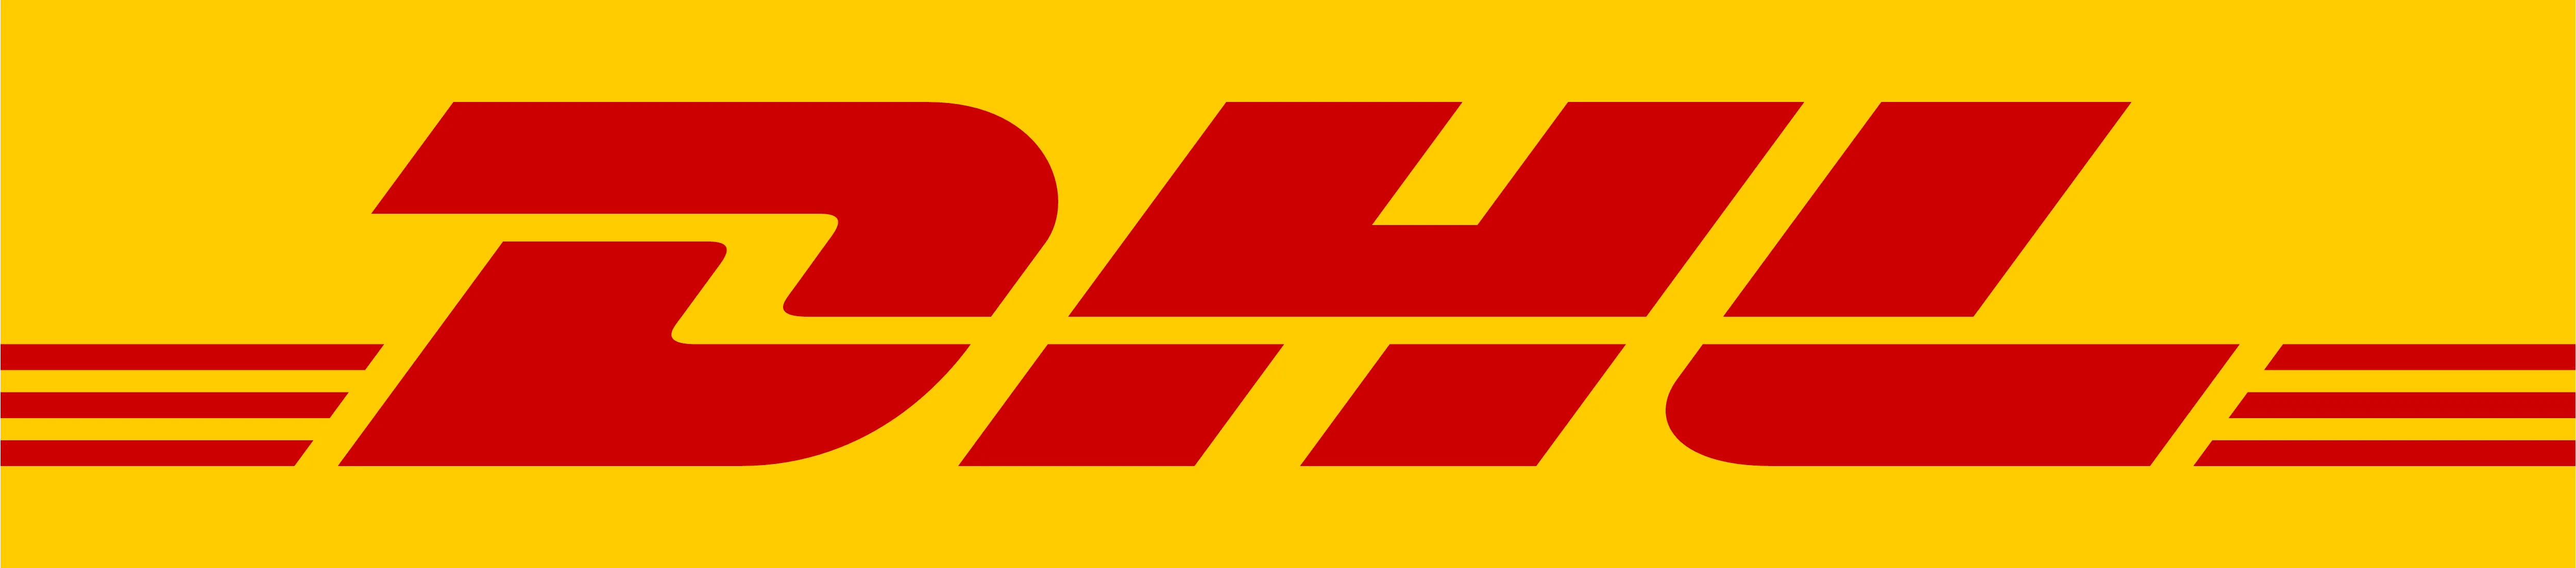 Dhl алматы. DHL. ДЧЛ логотип. DHL логотип компании. Логотип DHL Express.